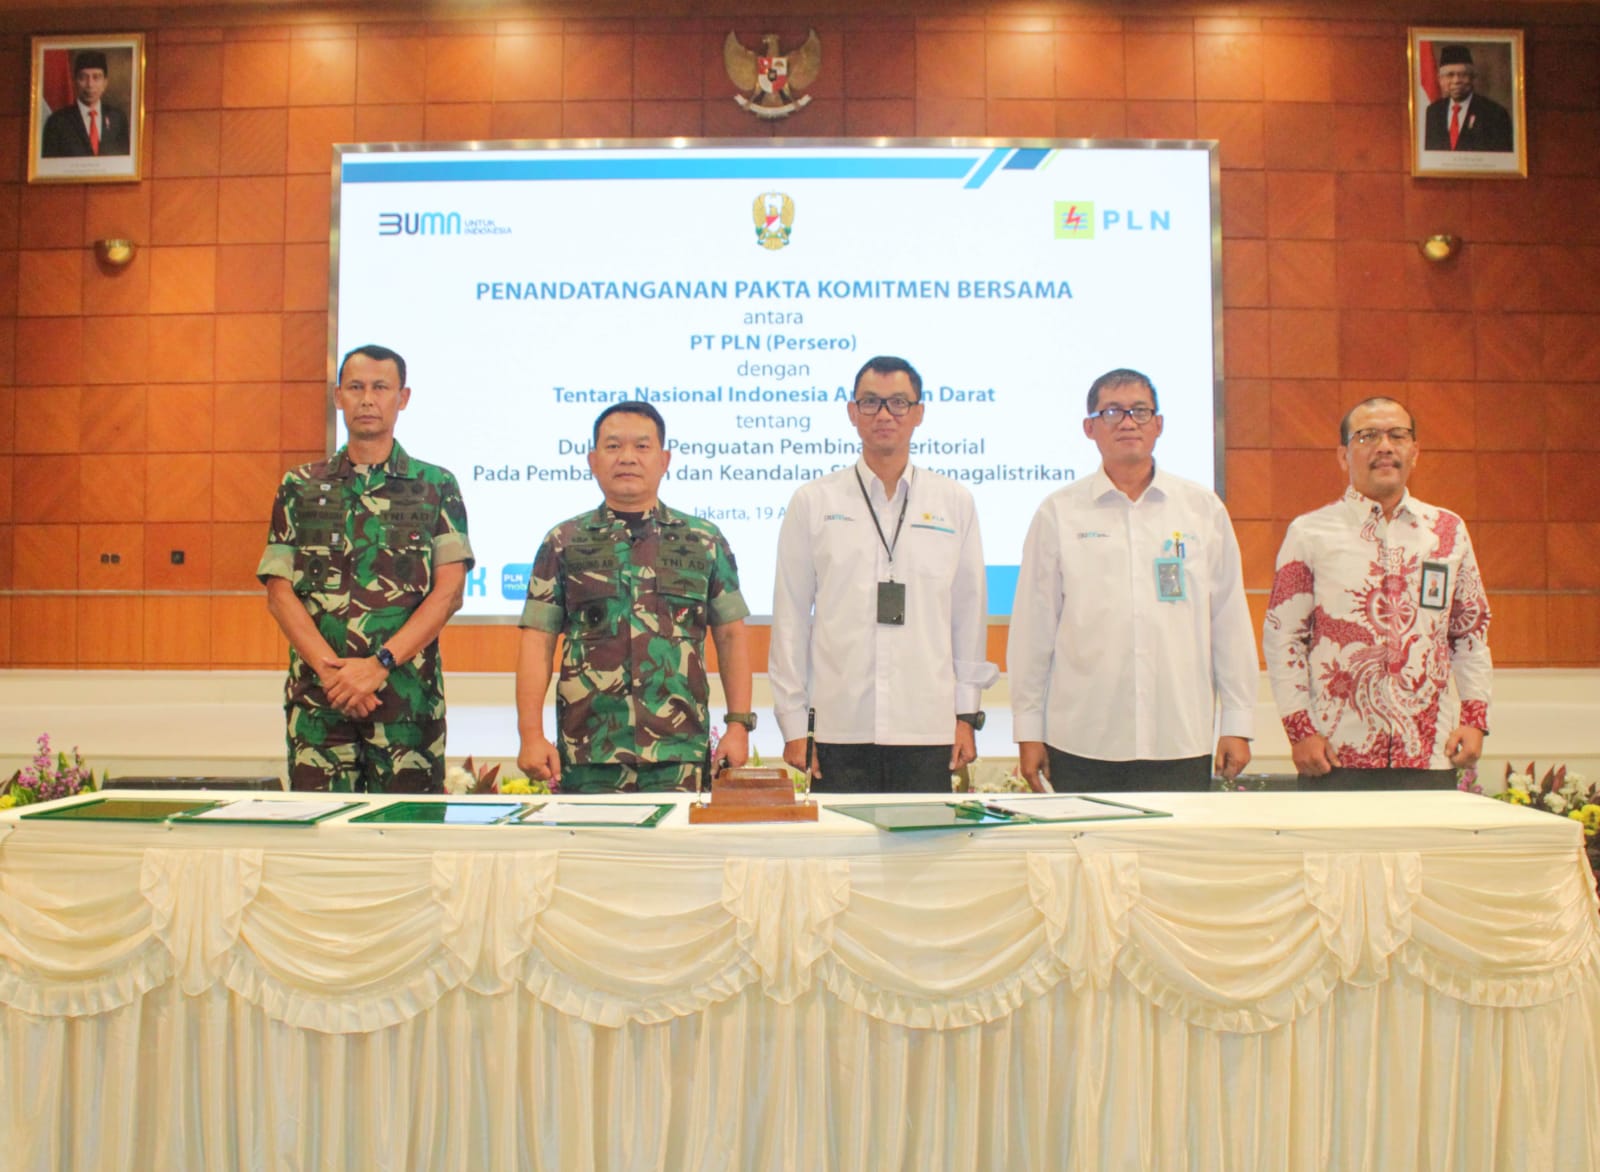 Penandatanganan Pakta Komitmen Bersama PT PLN-TNI AD, Dalam Penguatan Pembinaan Teritorial Pembangunan dan Keandalan Sistem Ketenagalistrikan